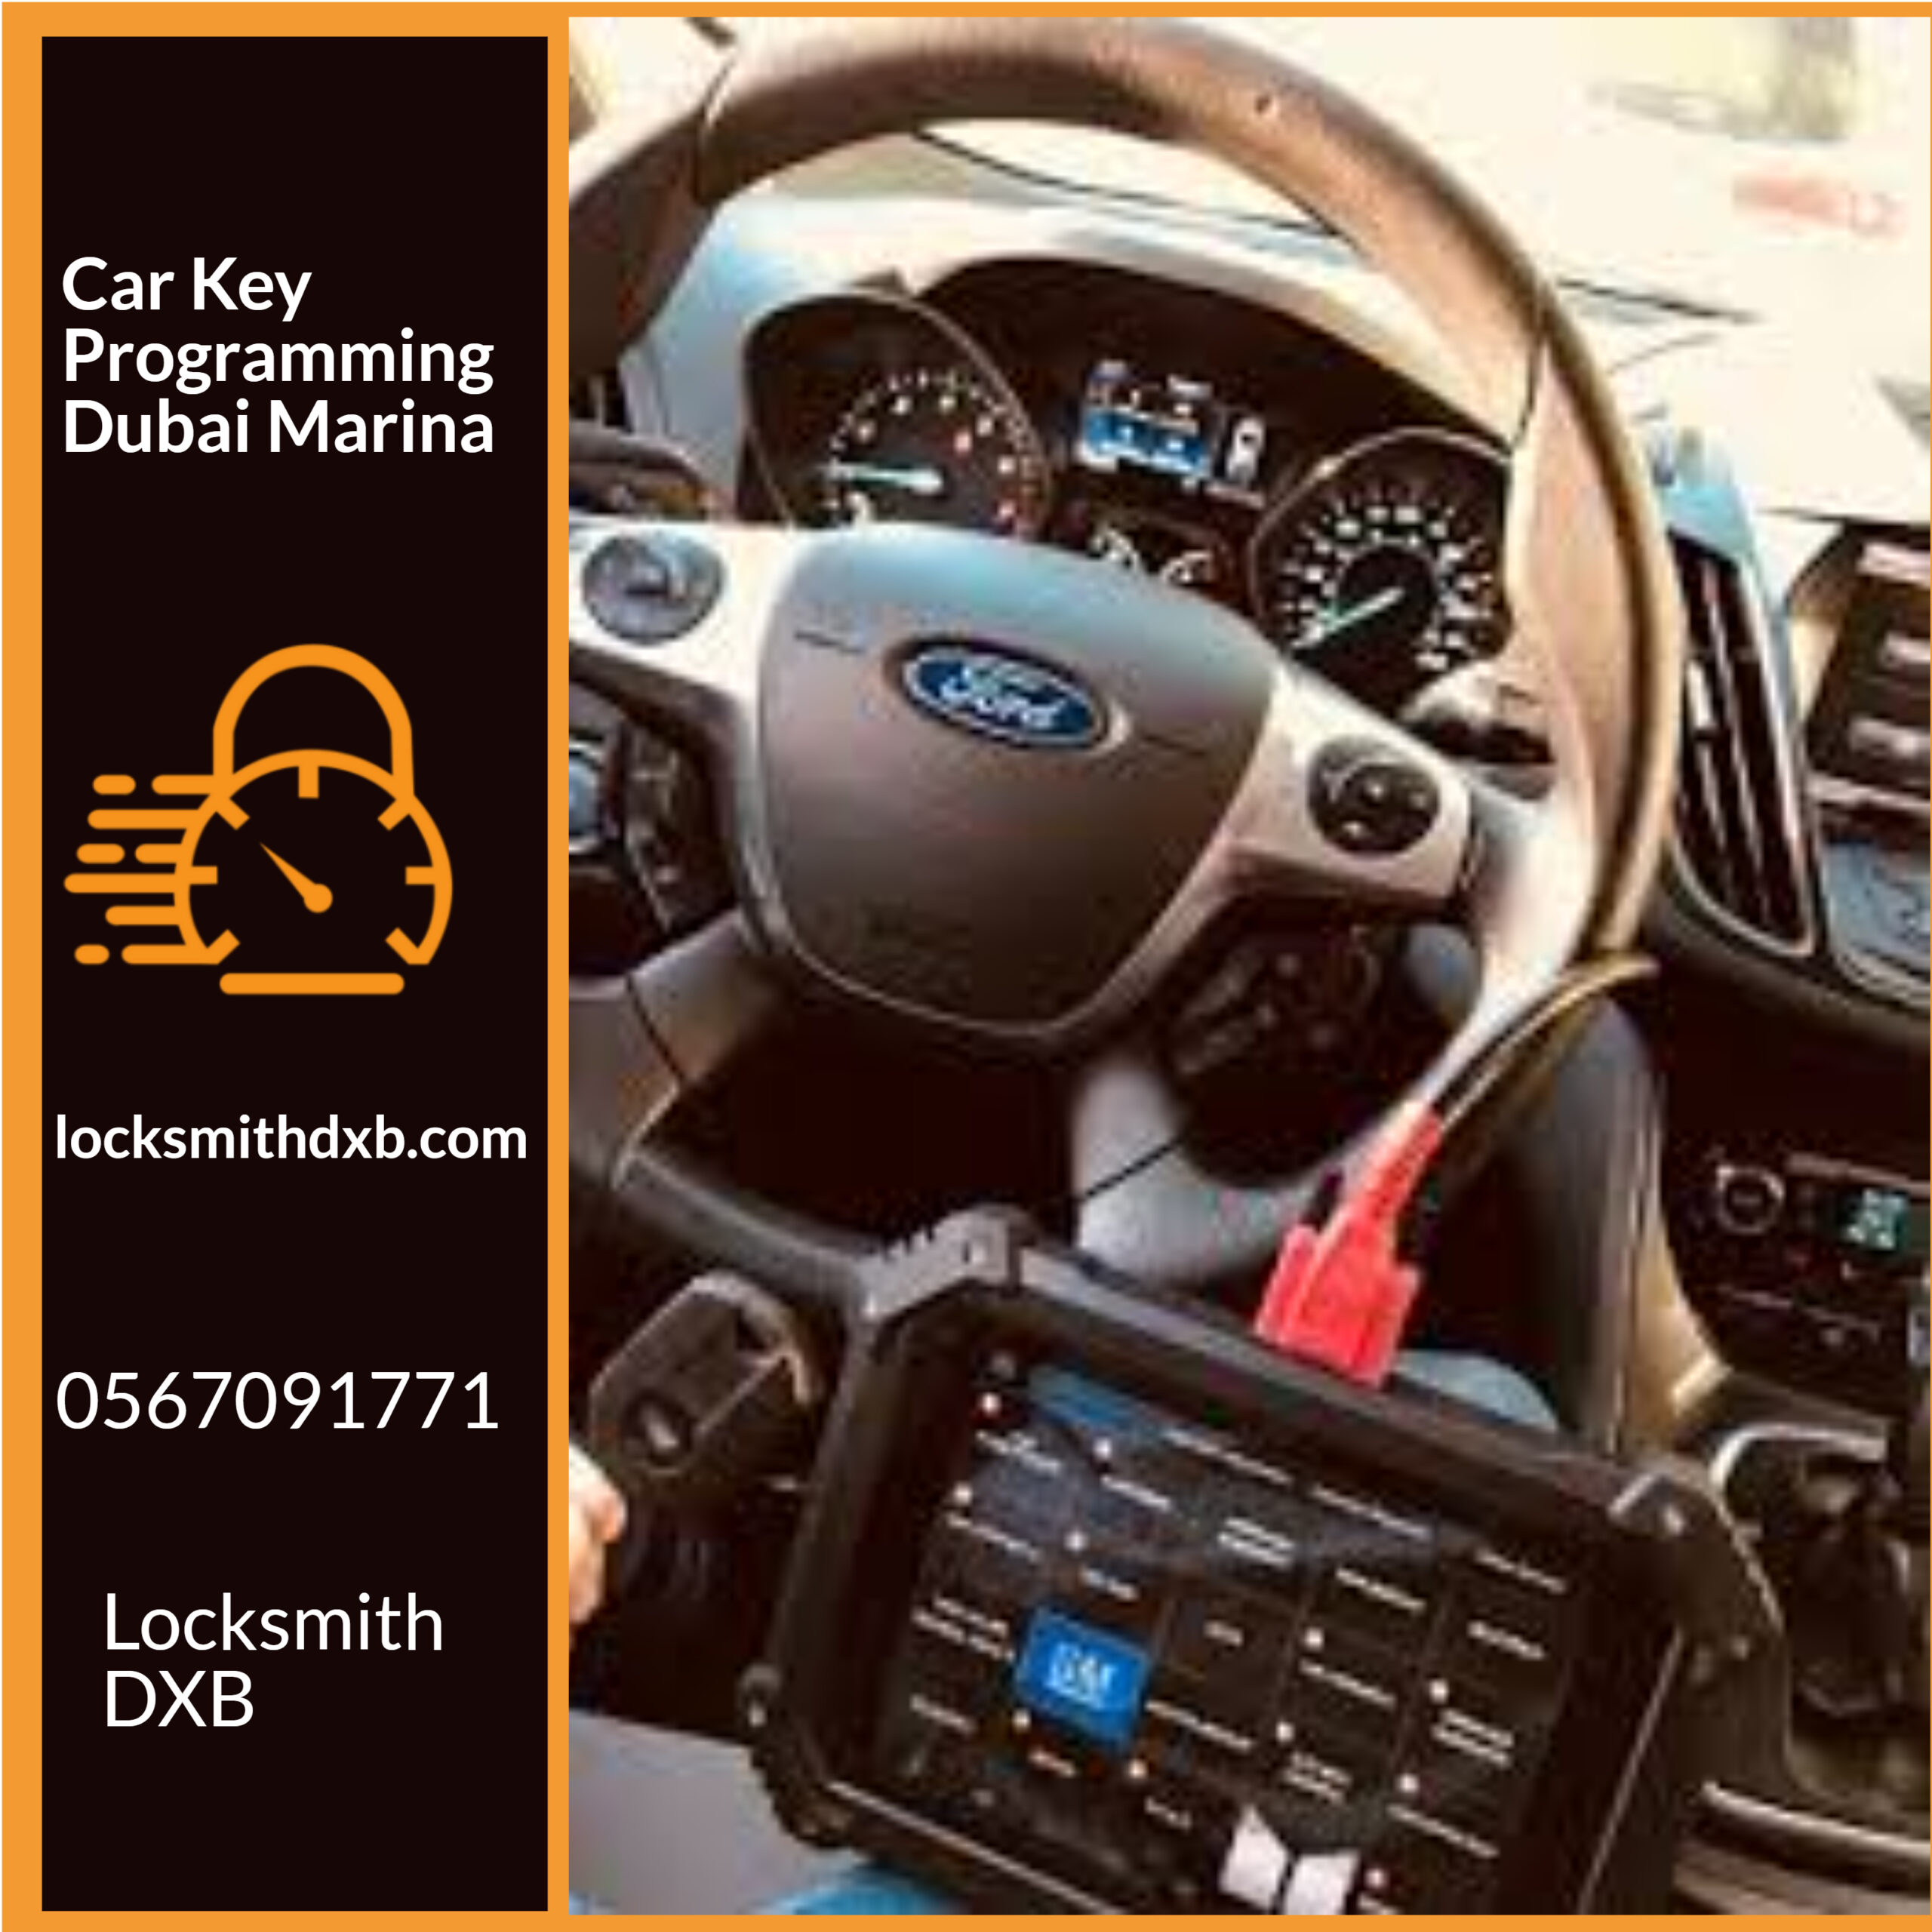 Car Key Programming Dubai Marina